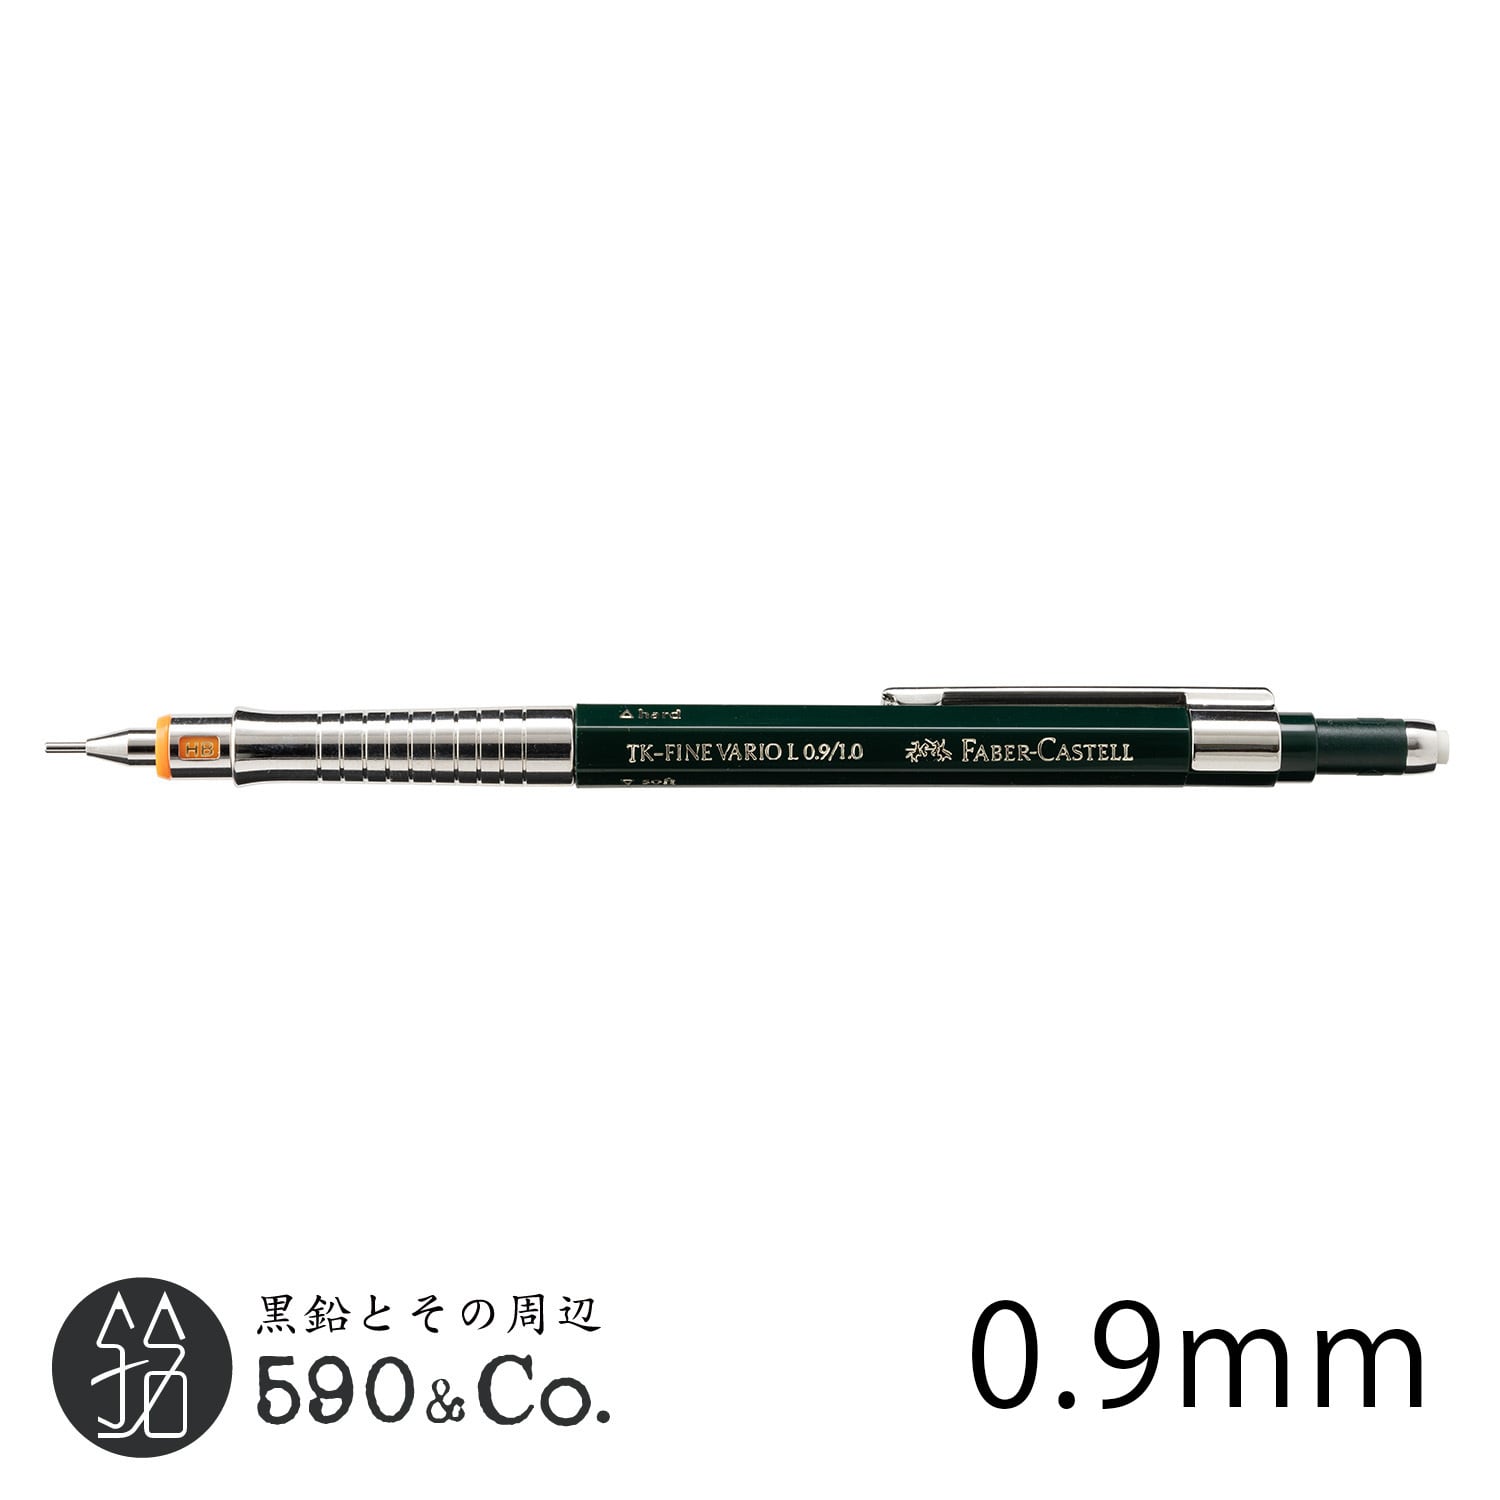 【FABER-CASTELL/ファーバーカステル】TK-FINE バリオL 製図用シャープペンシル(0.9mm) 590Co.